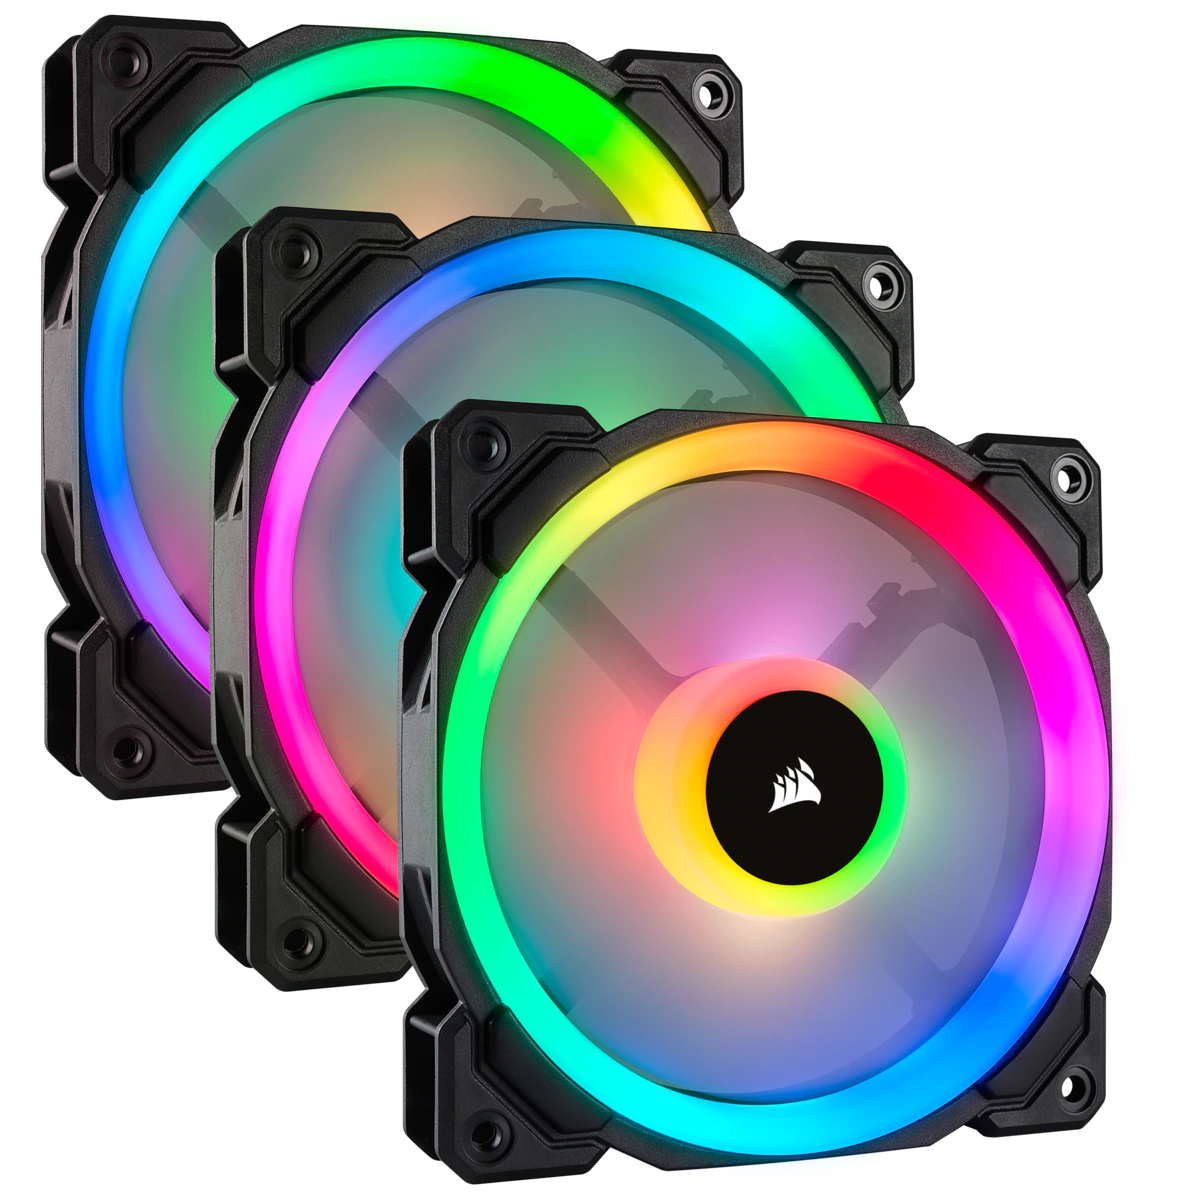 The Best RGB Fan: Corsair LL120 3-Pack of Fans